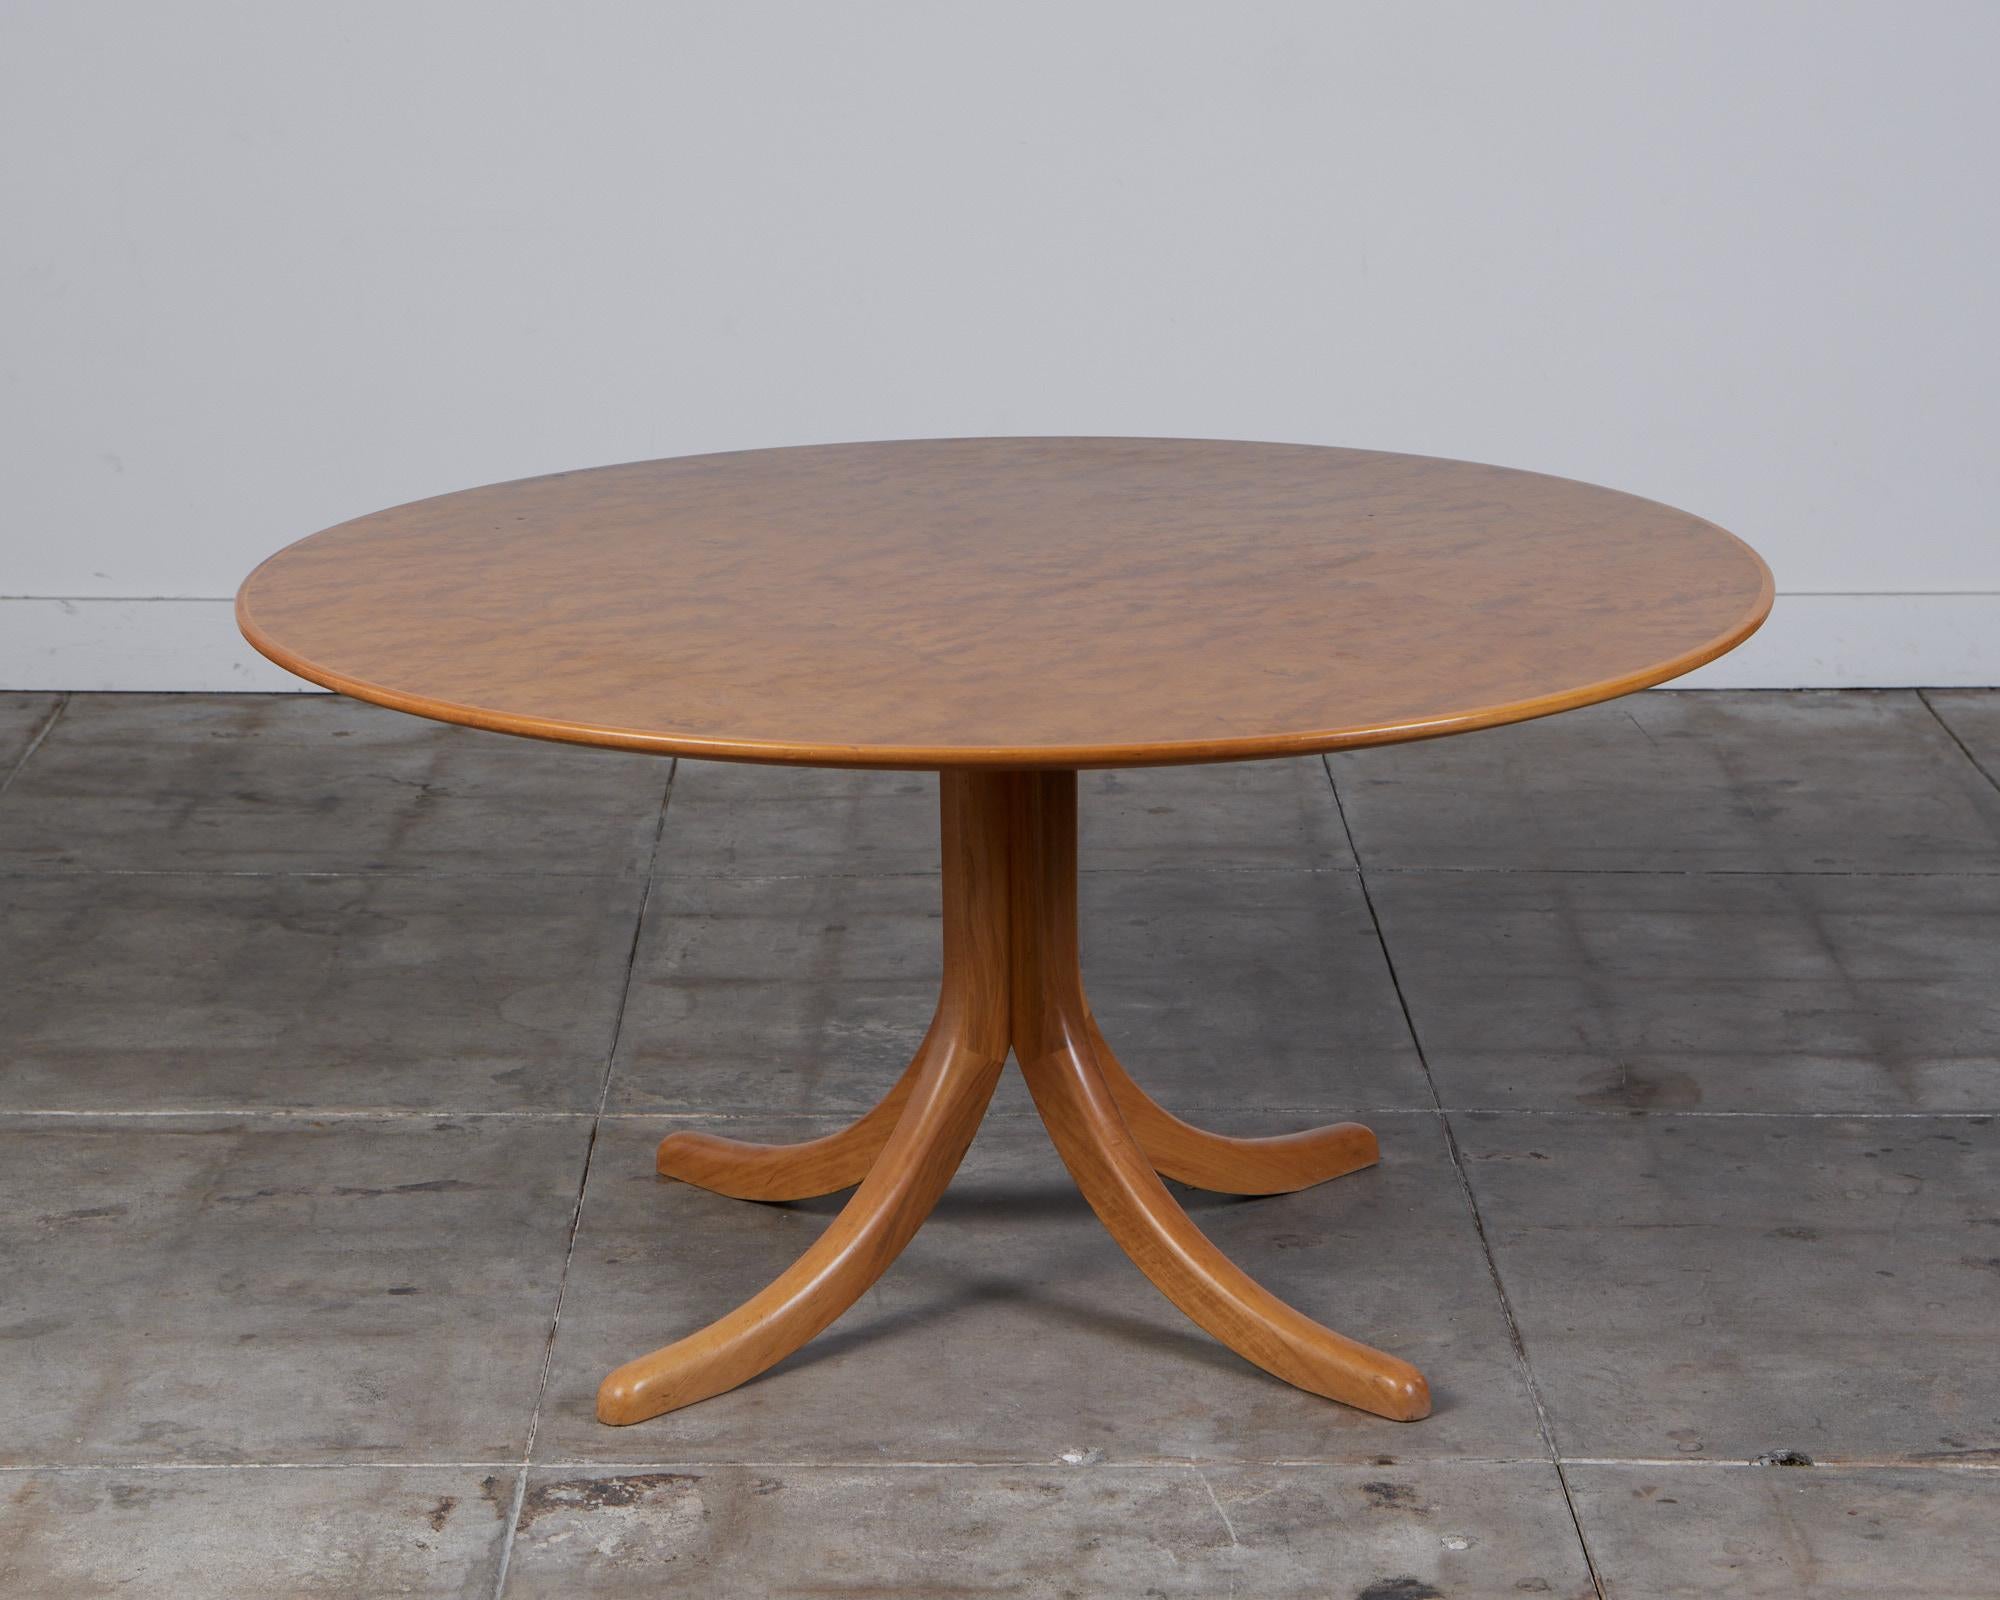 Burl wood dining table by Austrian born architect and designer Josef Frank for Svenskt Tenn, c.1960s, Sweden. The 